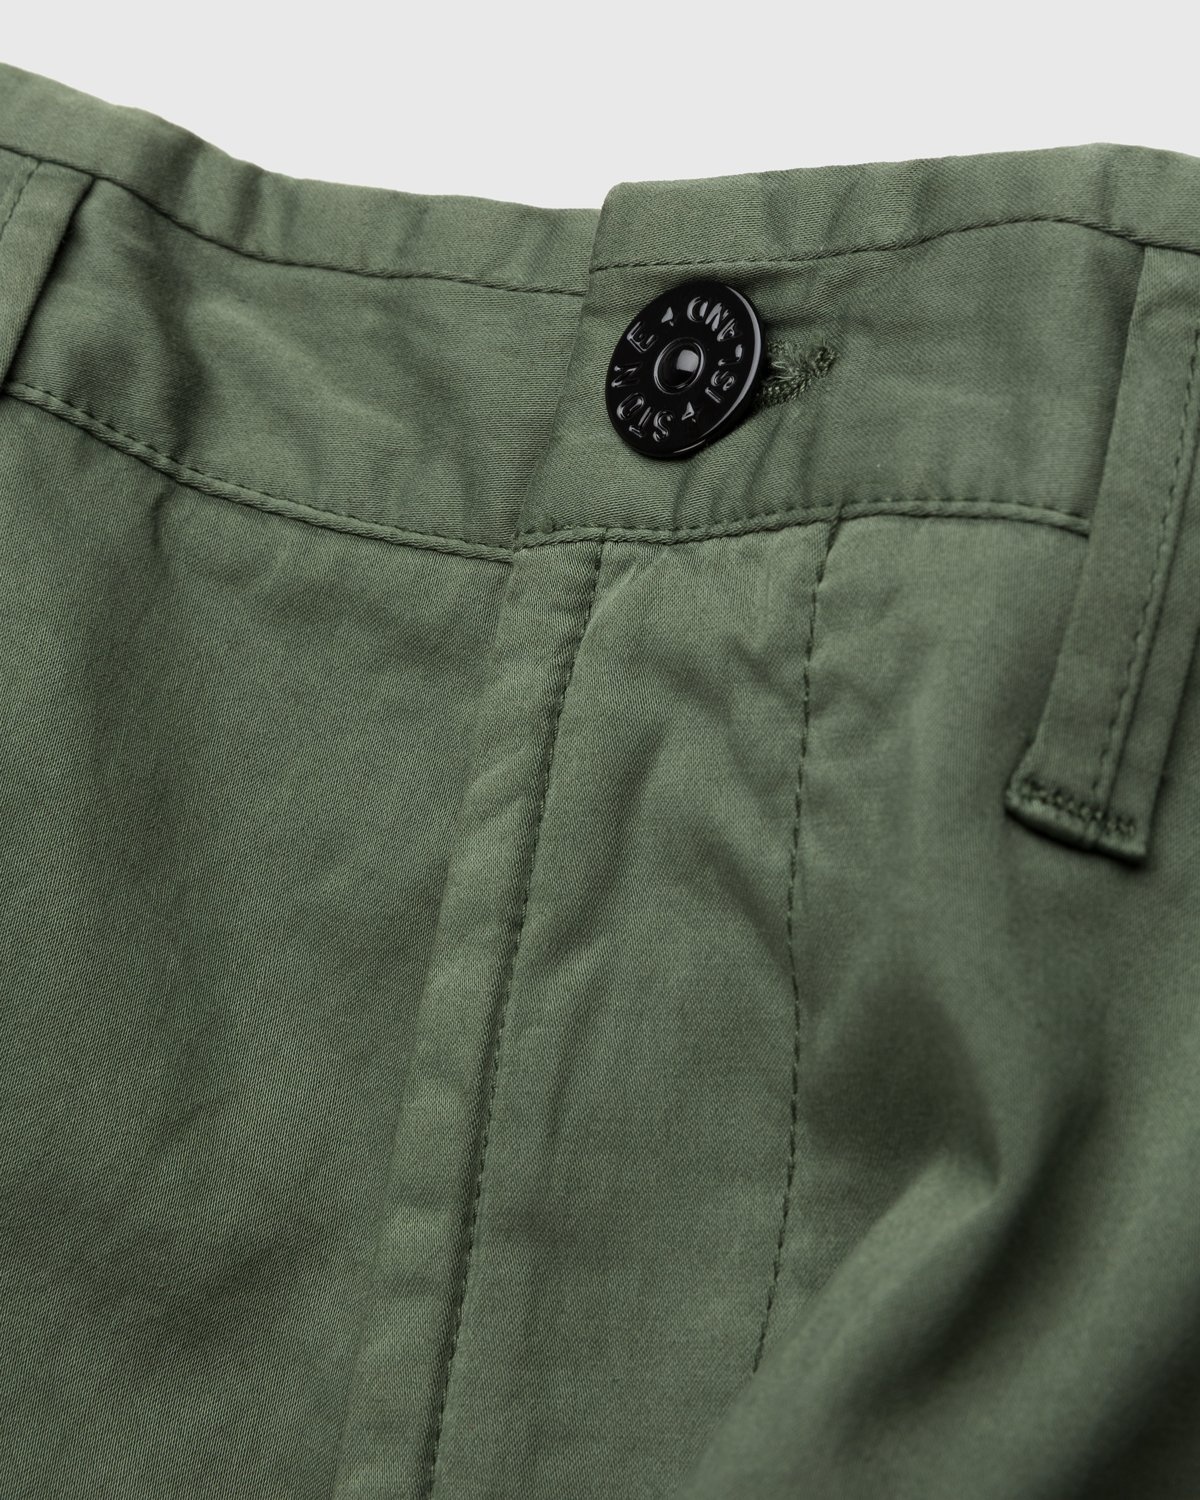 Stone Island – Pants Green - Cargo Pants - Green - Image 5